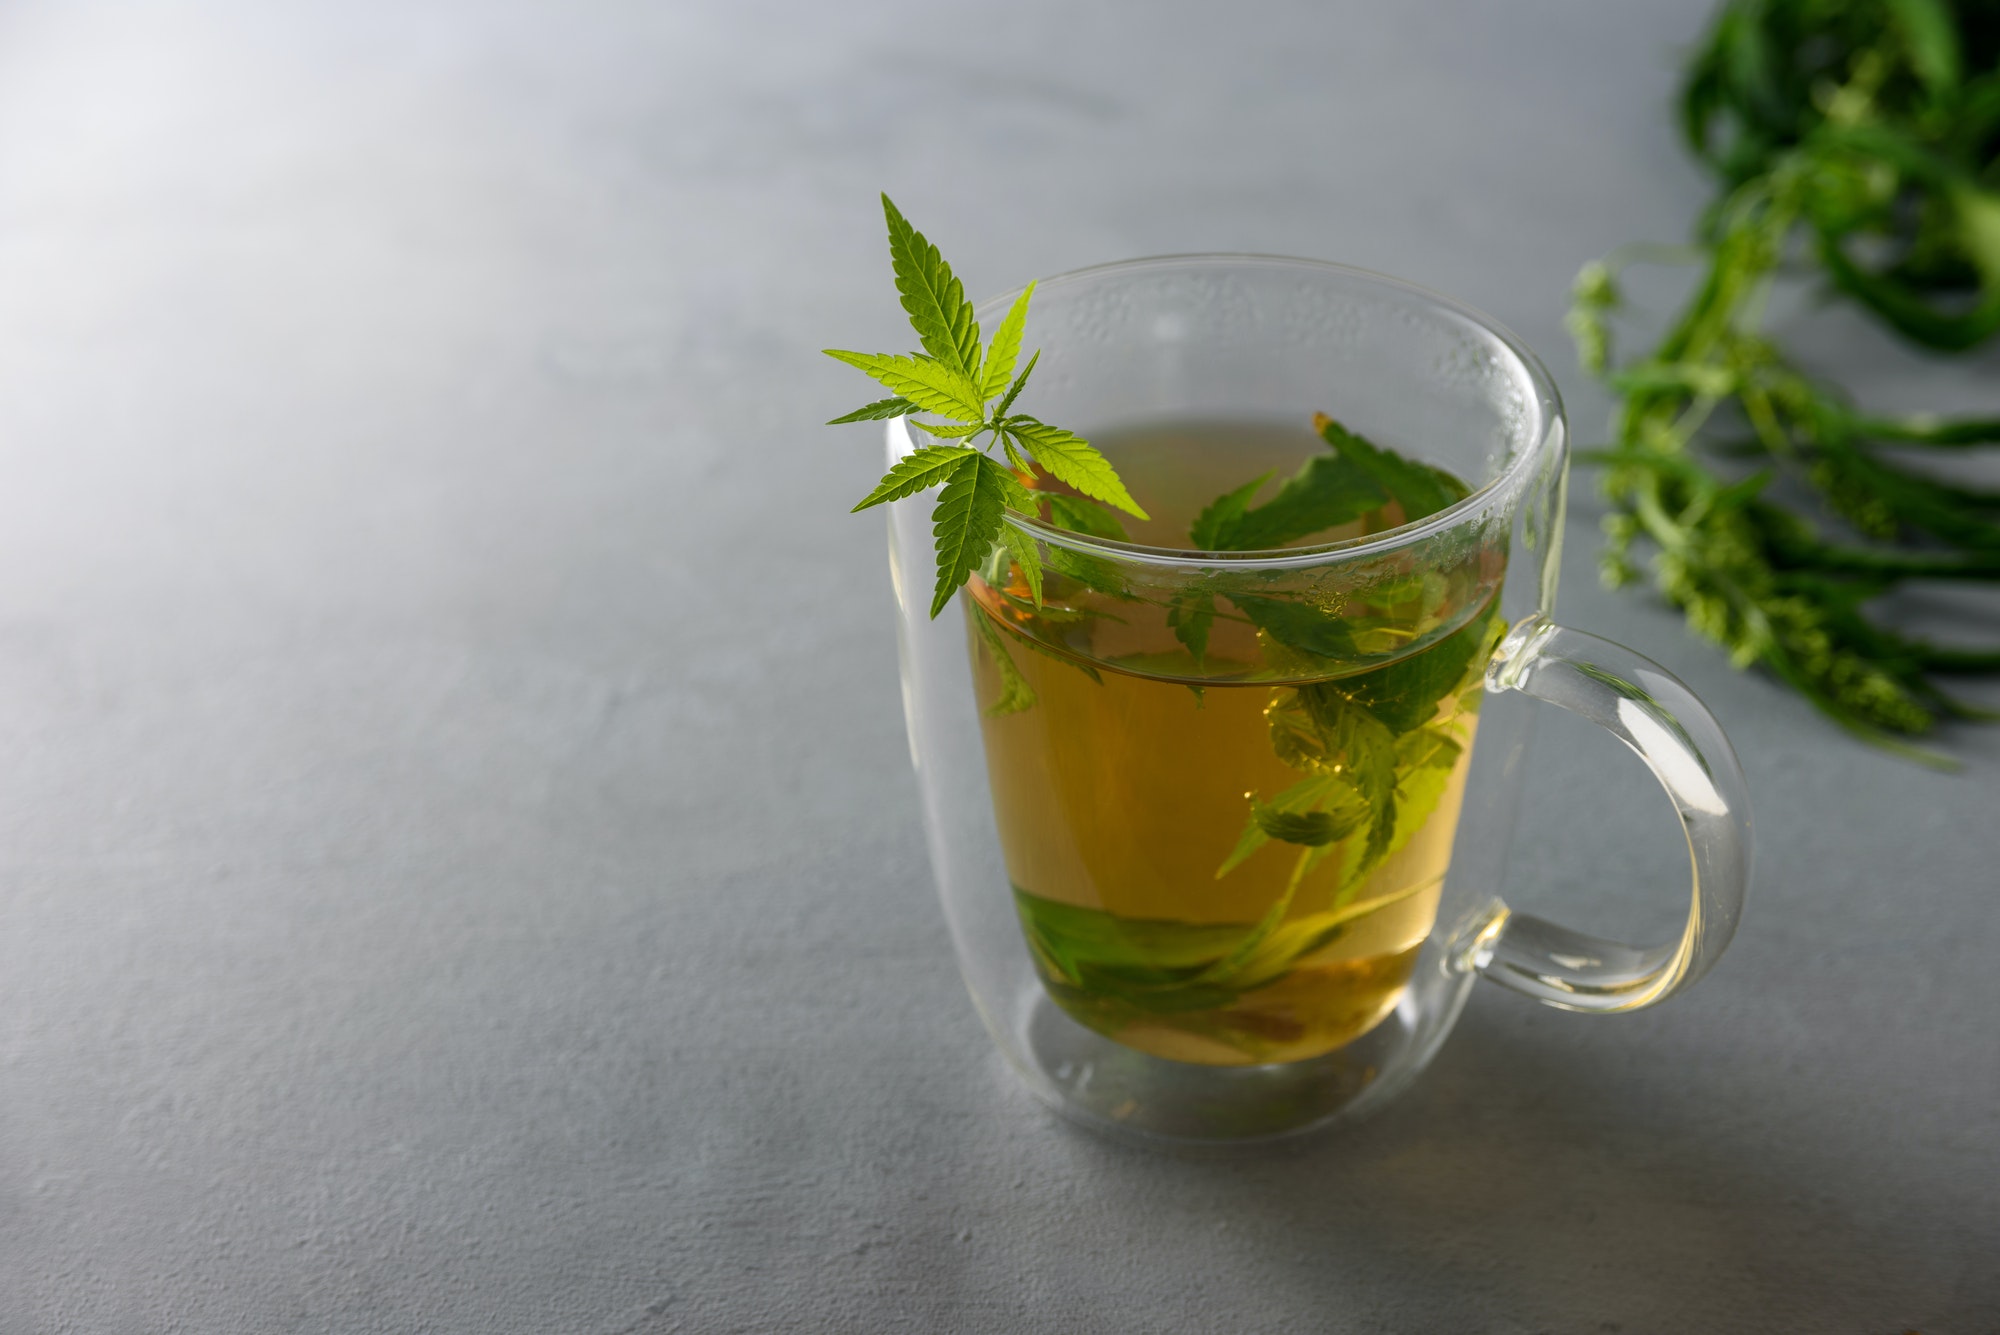 Cup of herbal cannabis tea